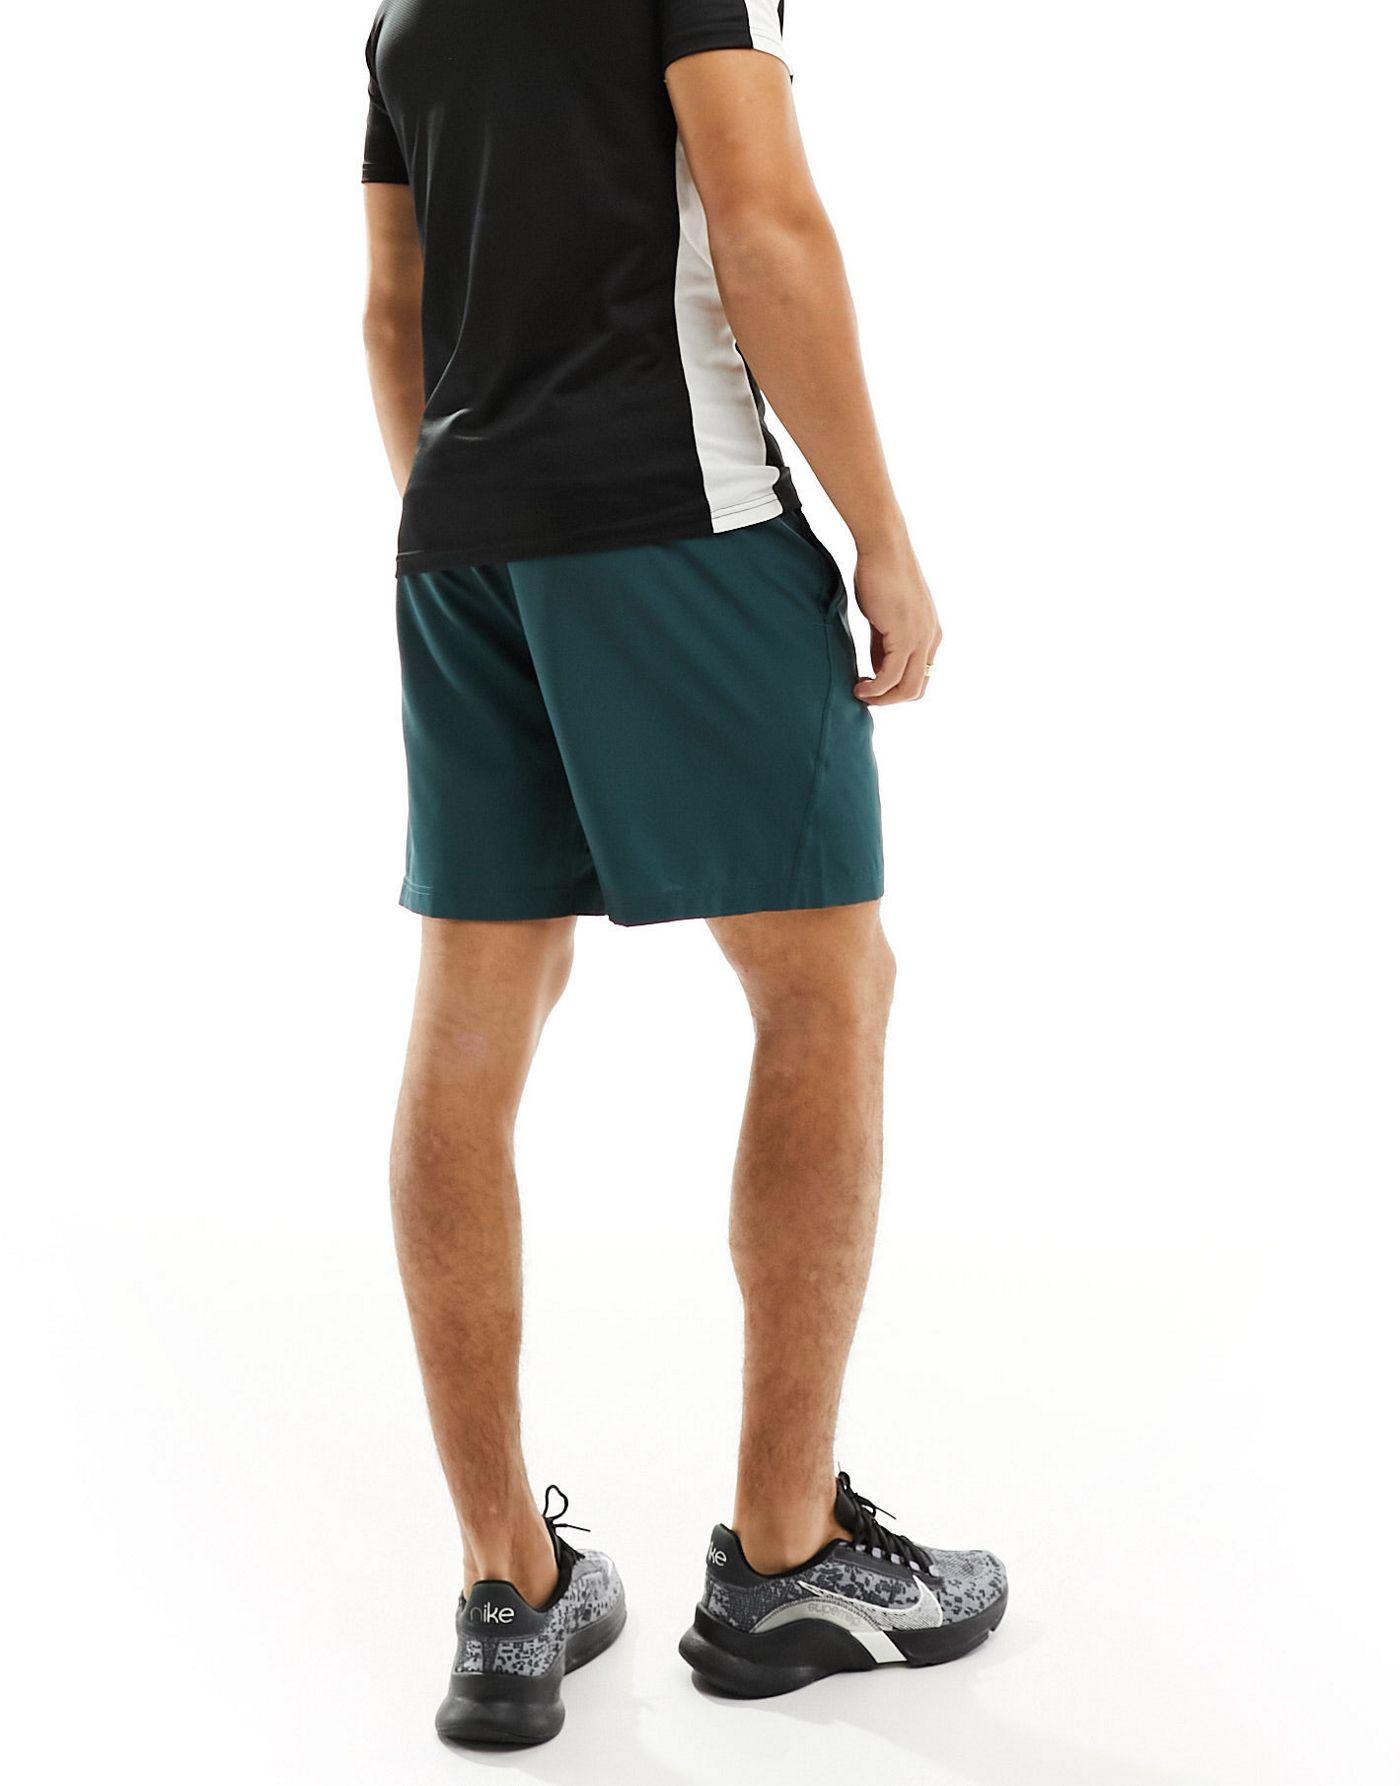 Nike Training Dri-FIT form 7in short in deep green 